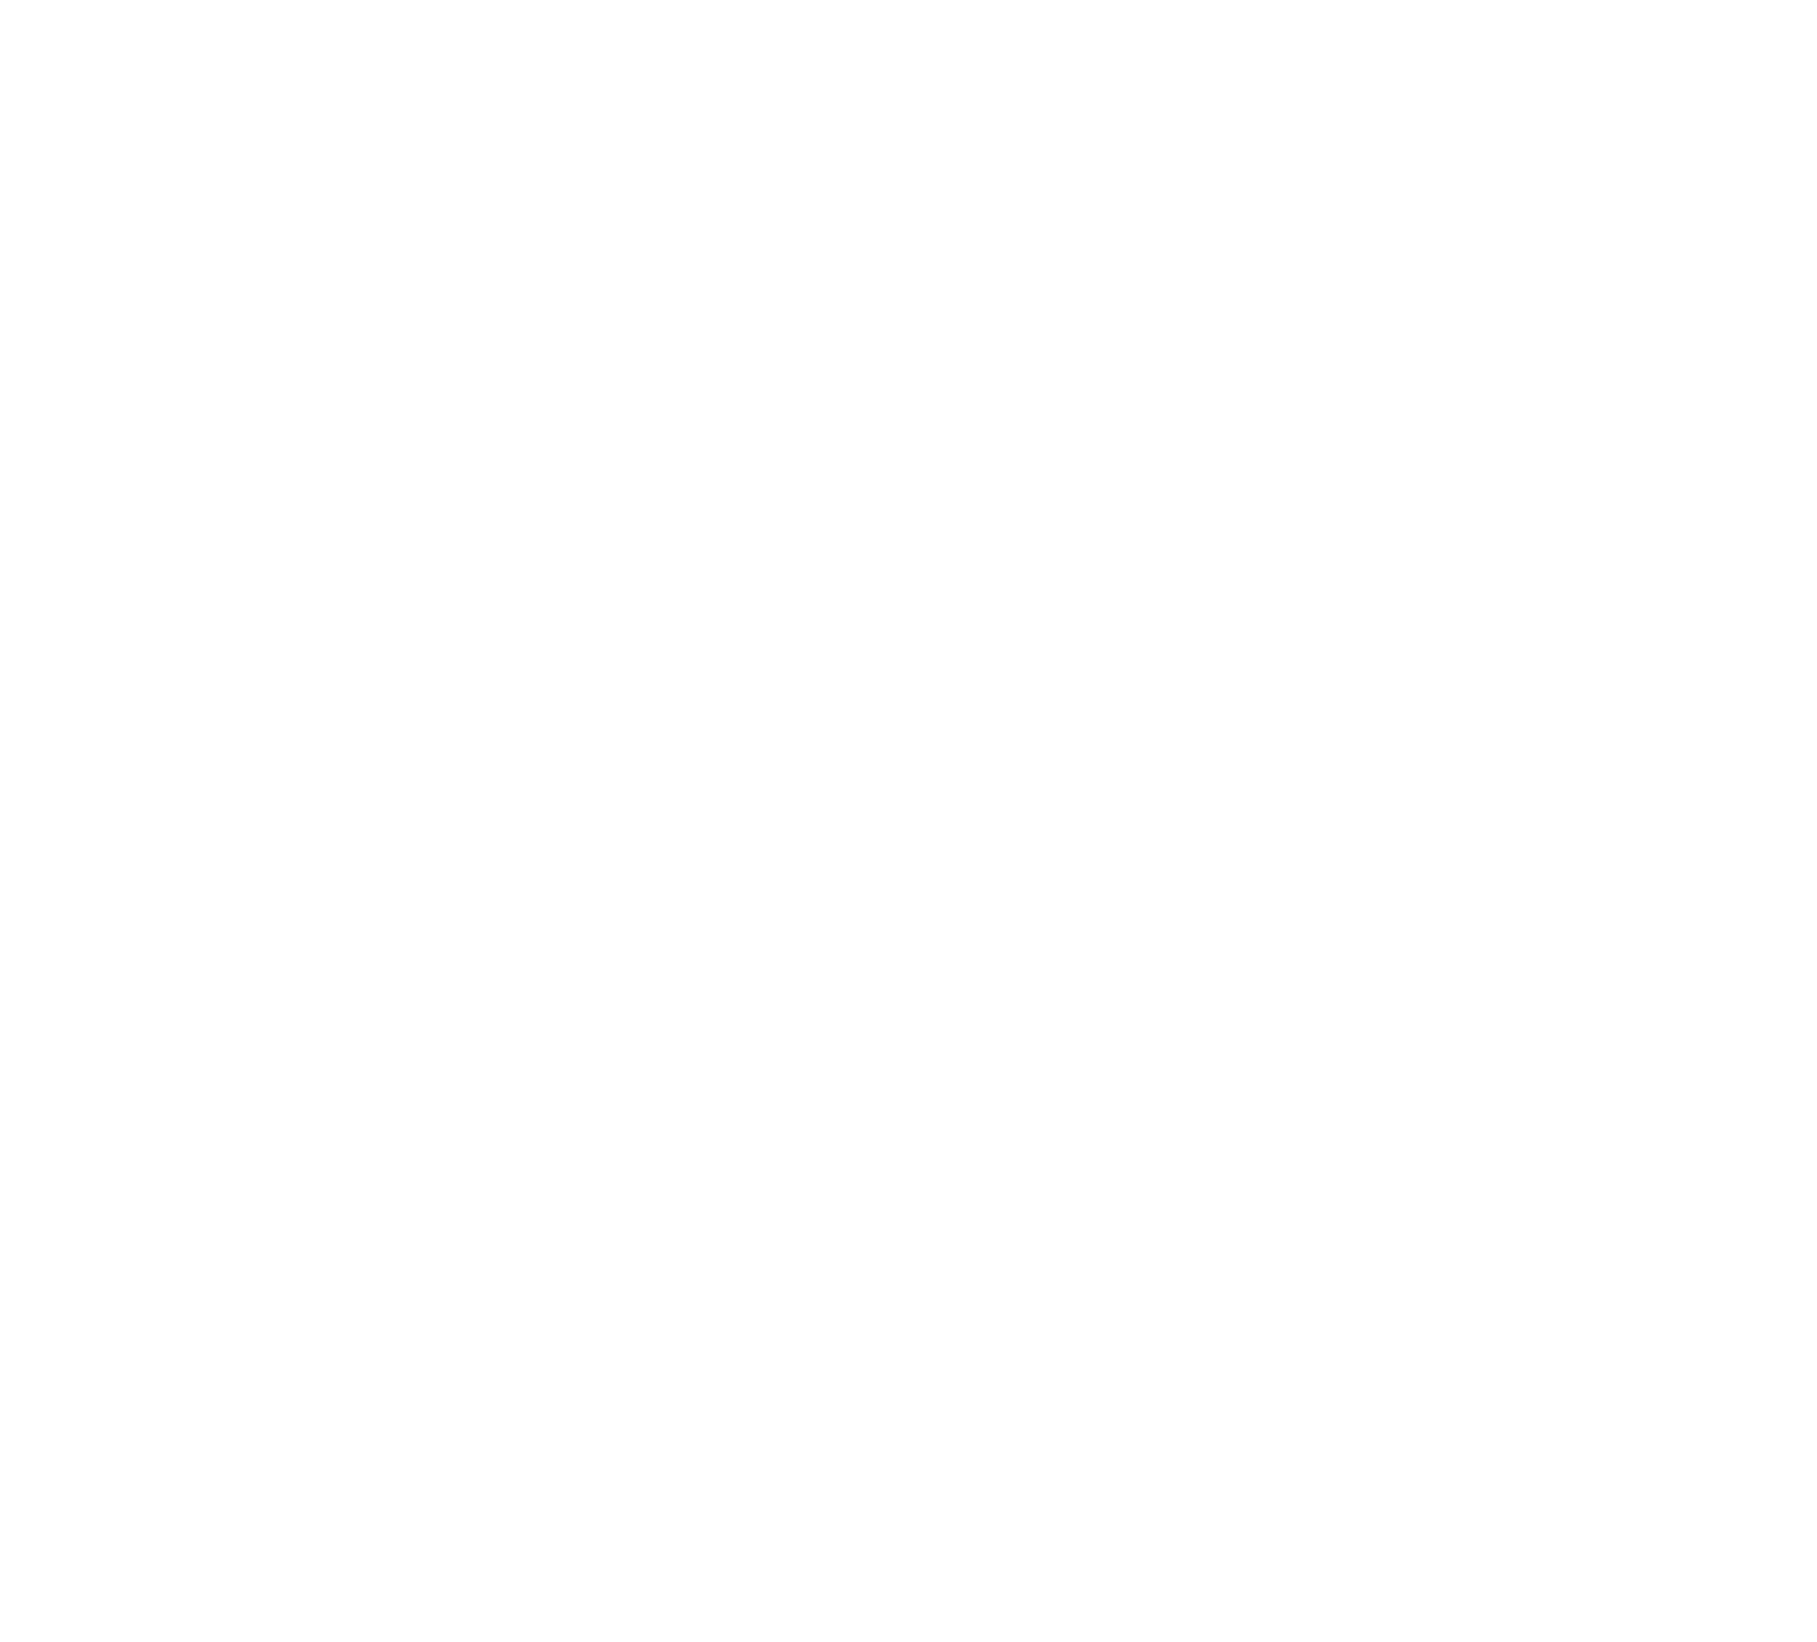 H/Advisors Cicero